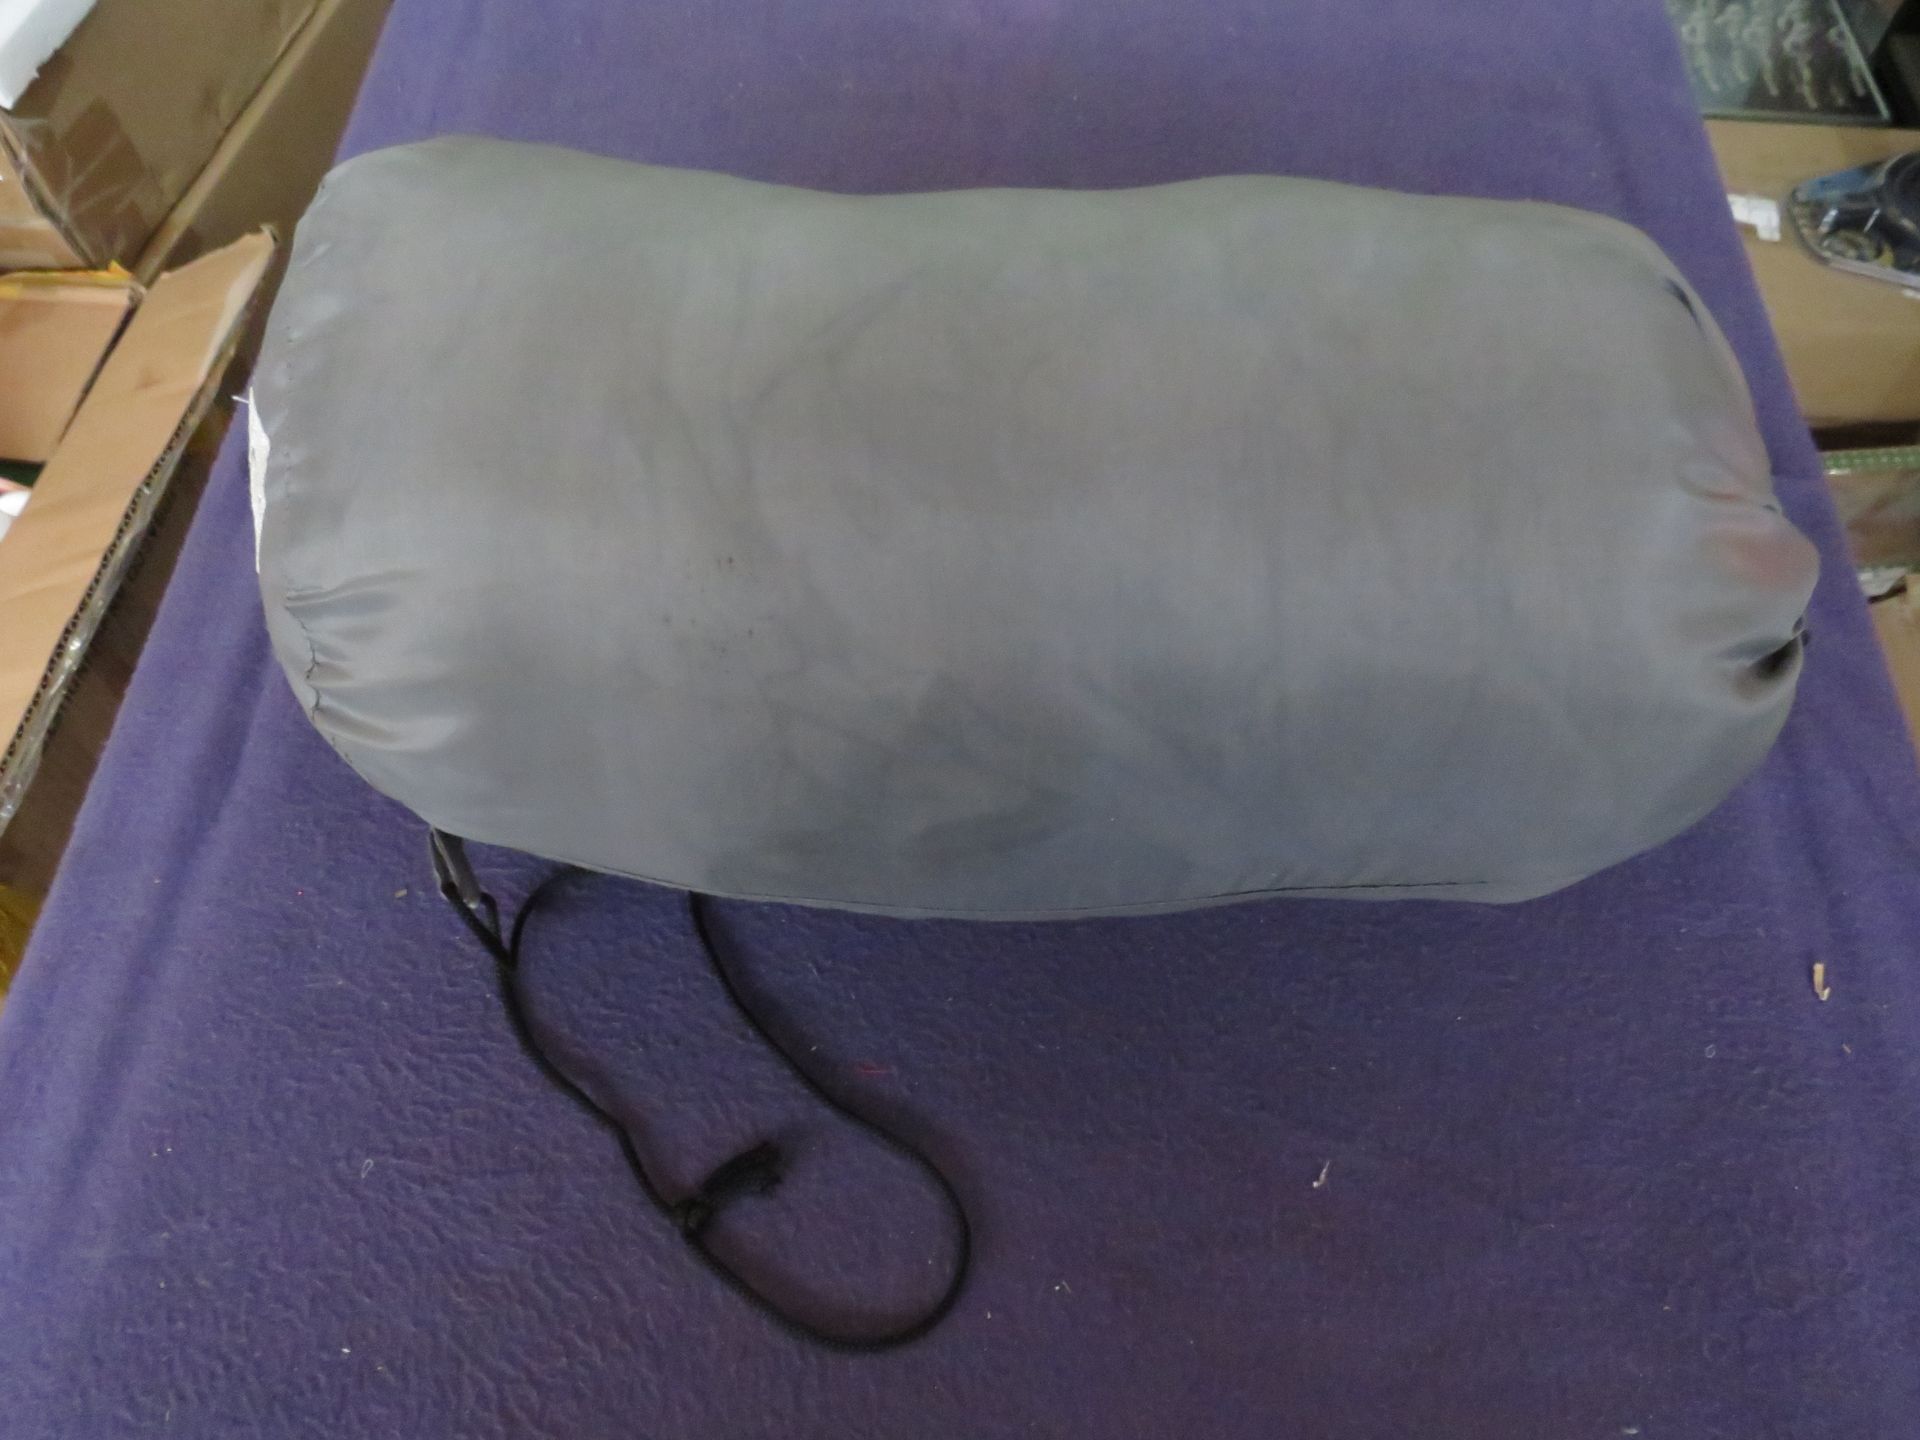 Ozark Trail - 200GSM Adult Envelope Sleeping Bag - 190x75cm - Good Condition.